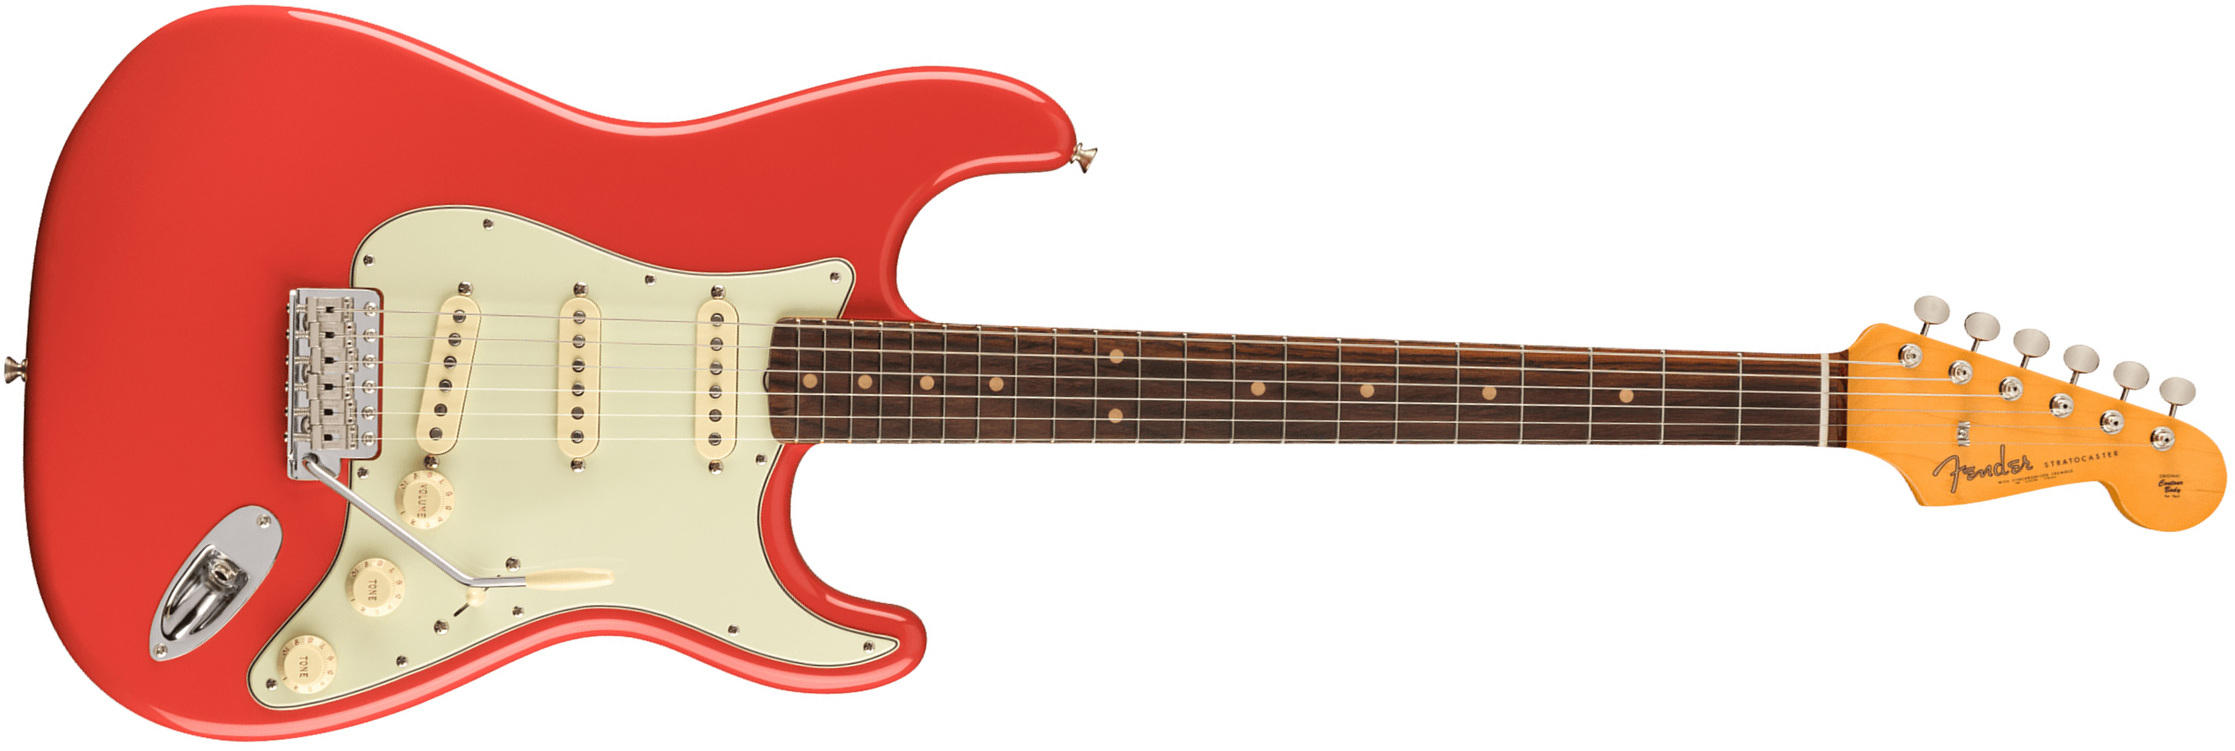 Fender Strat 1961 American Vintage Ii Usa 3s Trem Rw - Fiesta Red - Guitarra eléctrica con forma de str. - Main picture